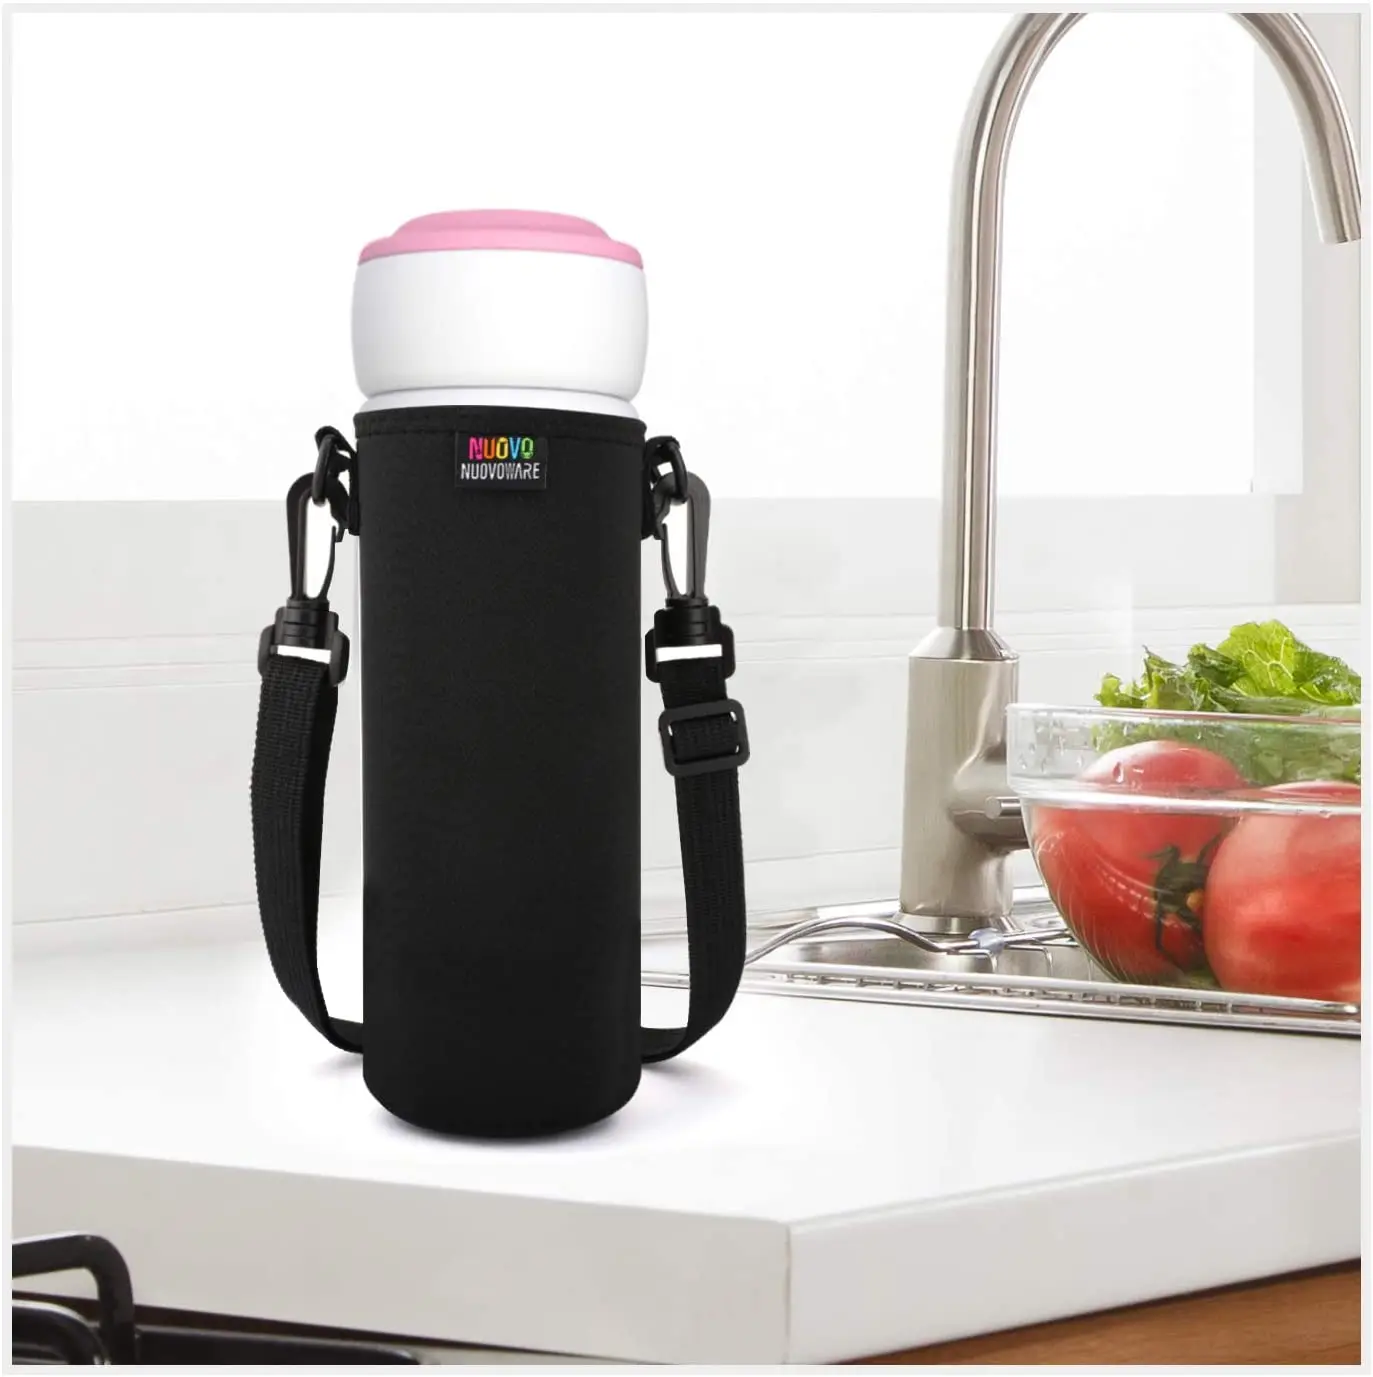 

Nuovoware 1000ML Water Bottle Carrier, Insulated Universal Neoprene Water bottle Holder Bag with Adjustable Shoulder Strap, Black/lucky tree/dreamy nebula/purple